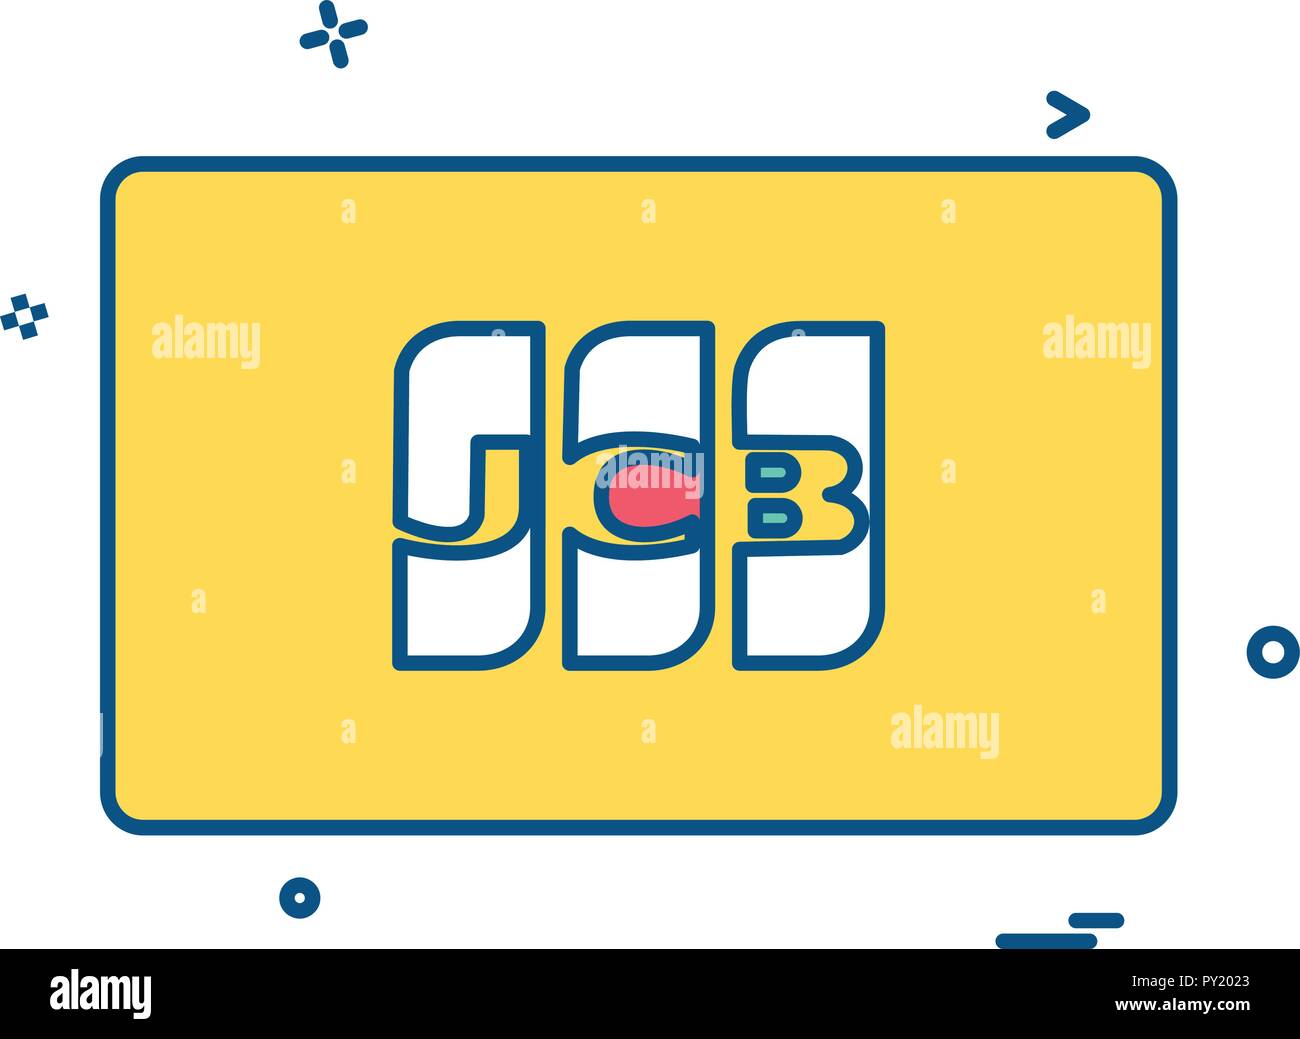 jcb card logo